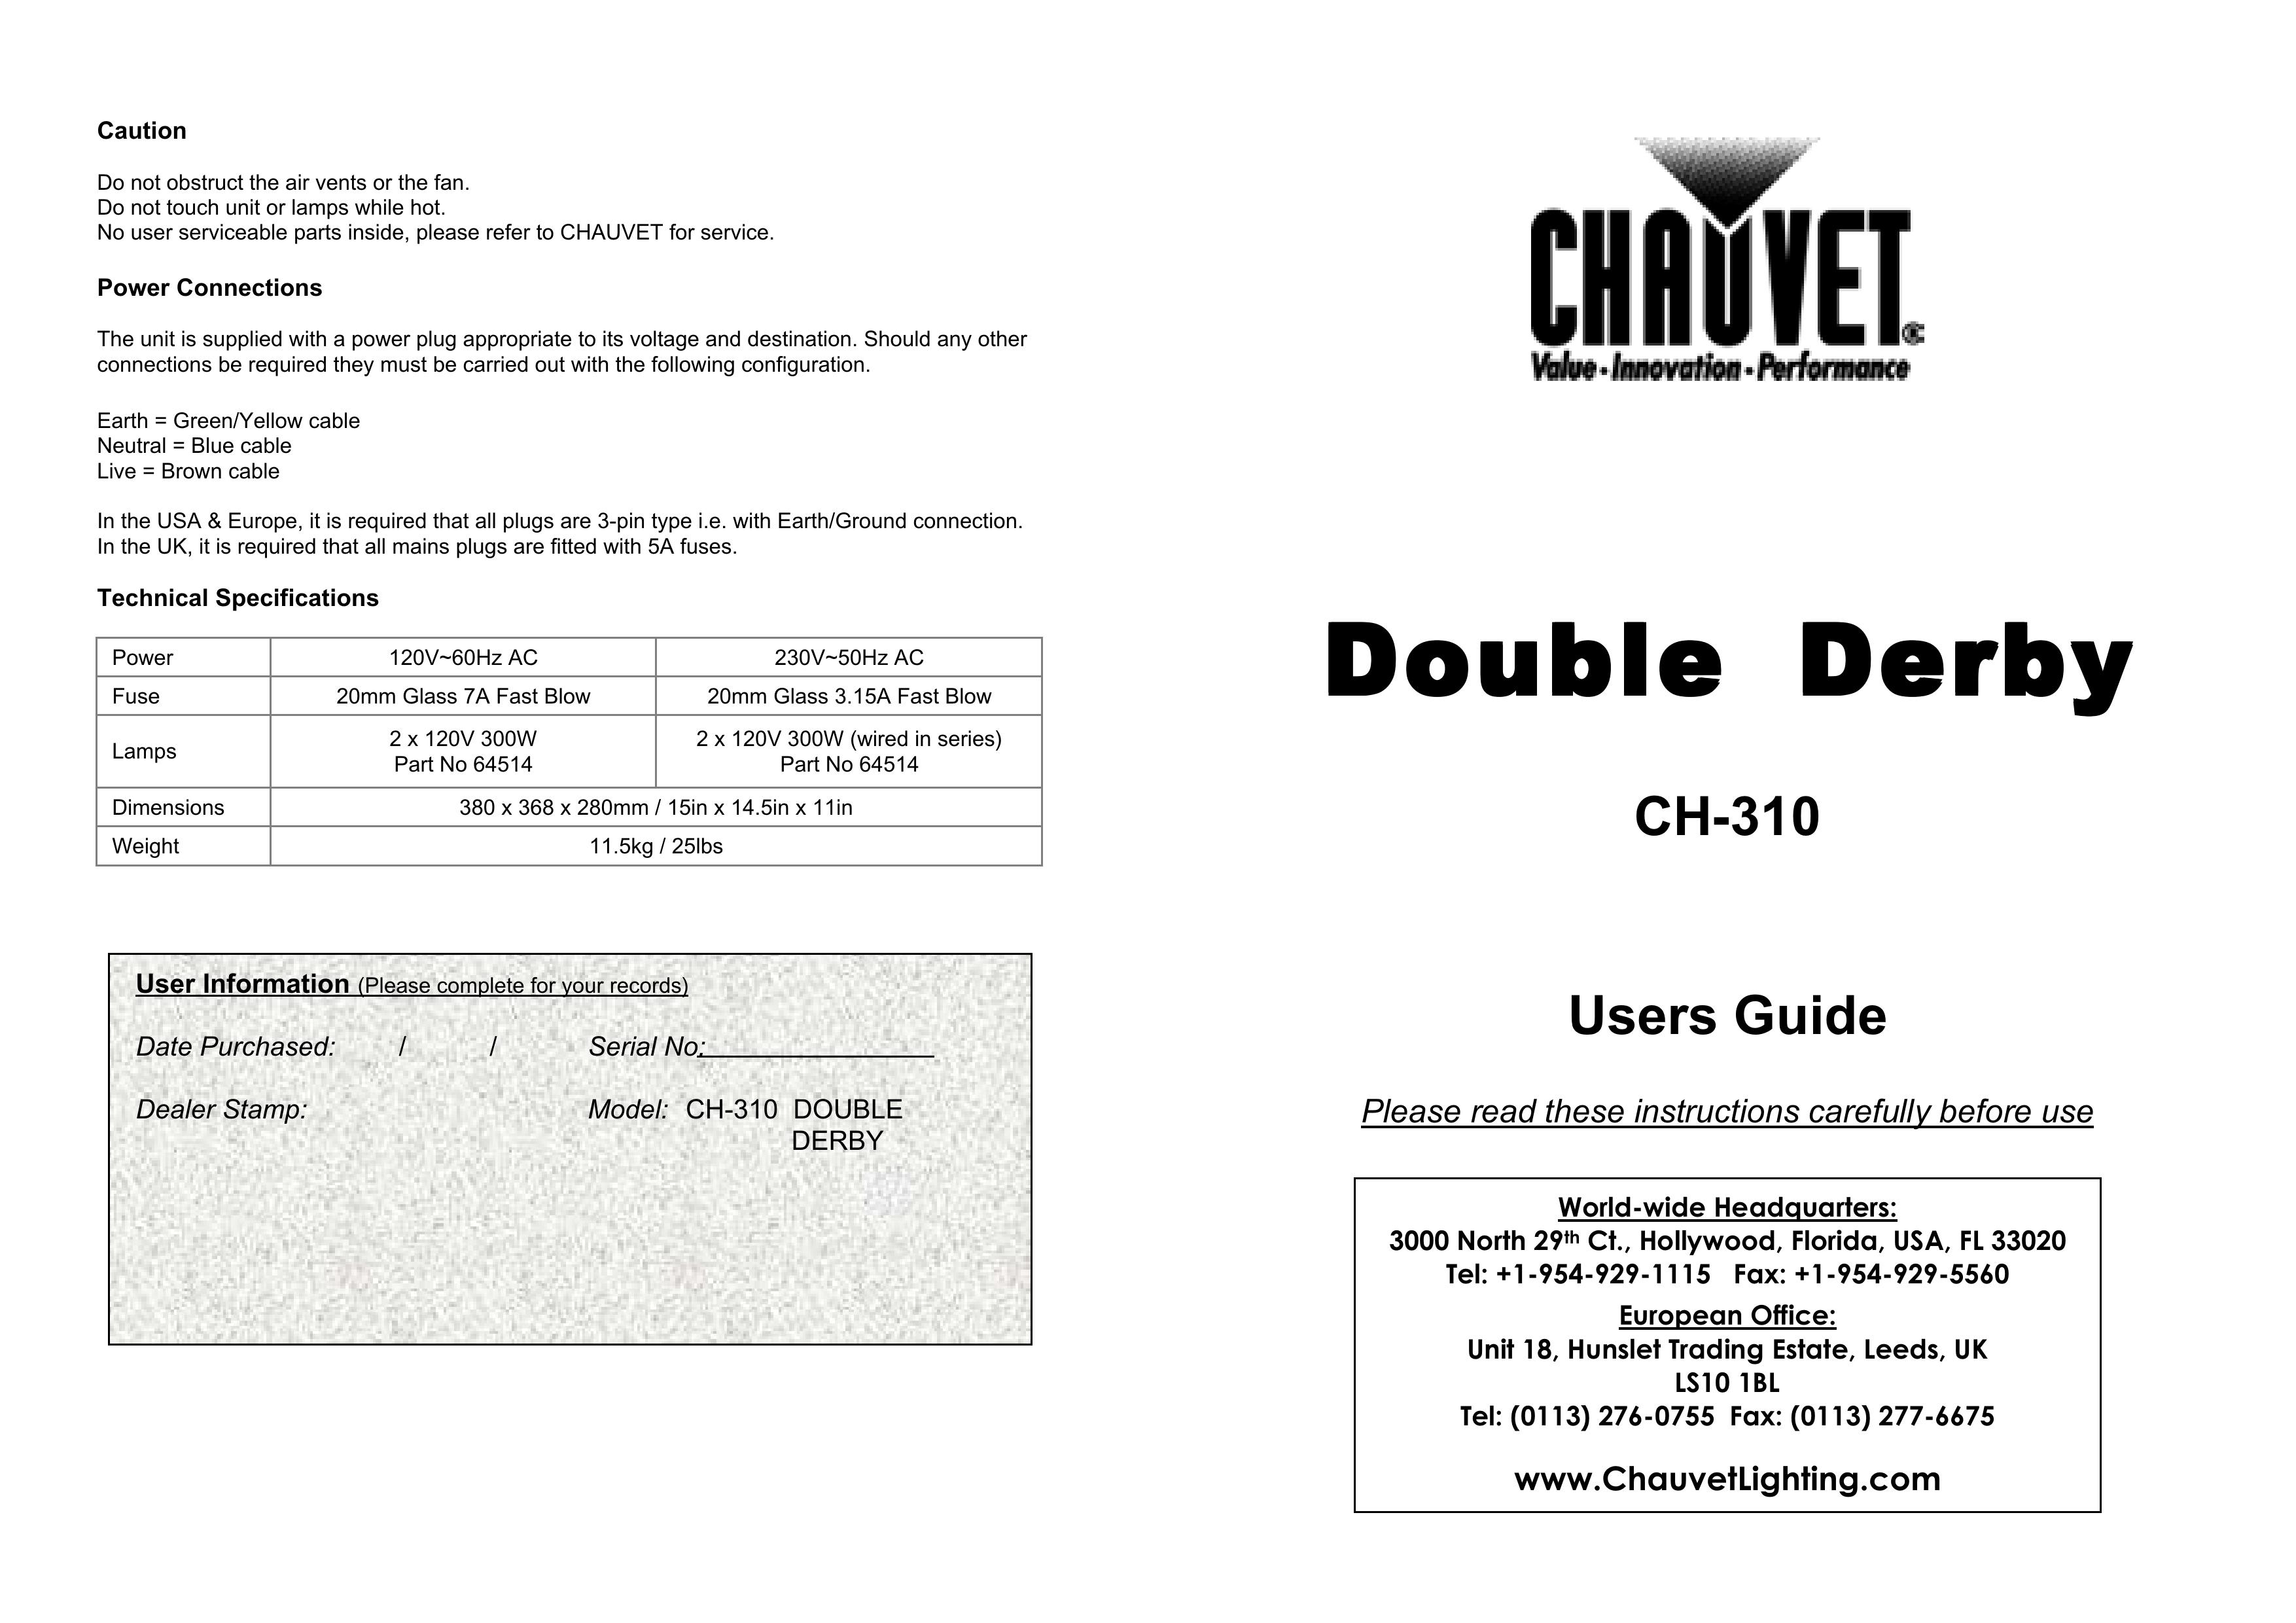 Chauvet Ch-310 Musical Instrument User Manual